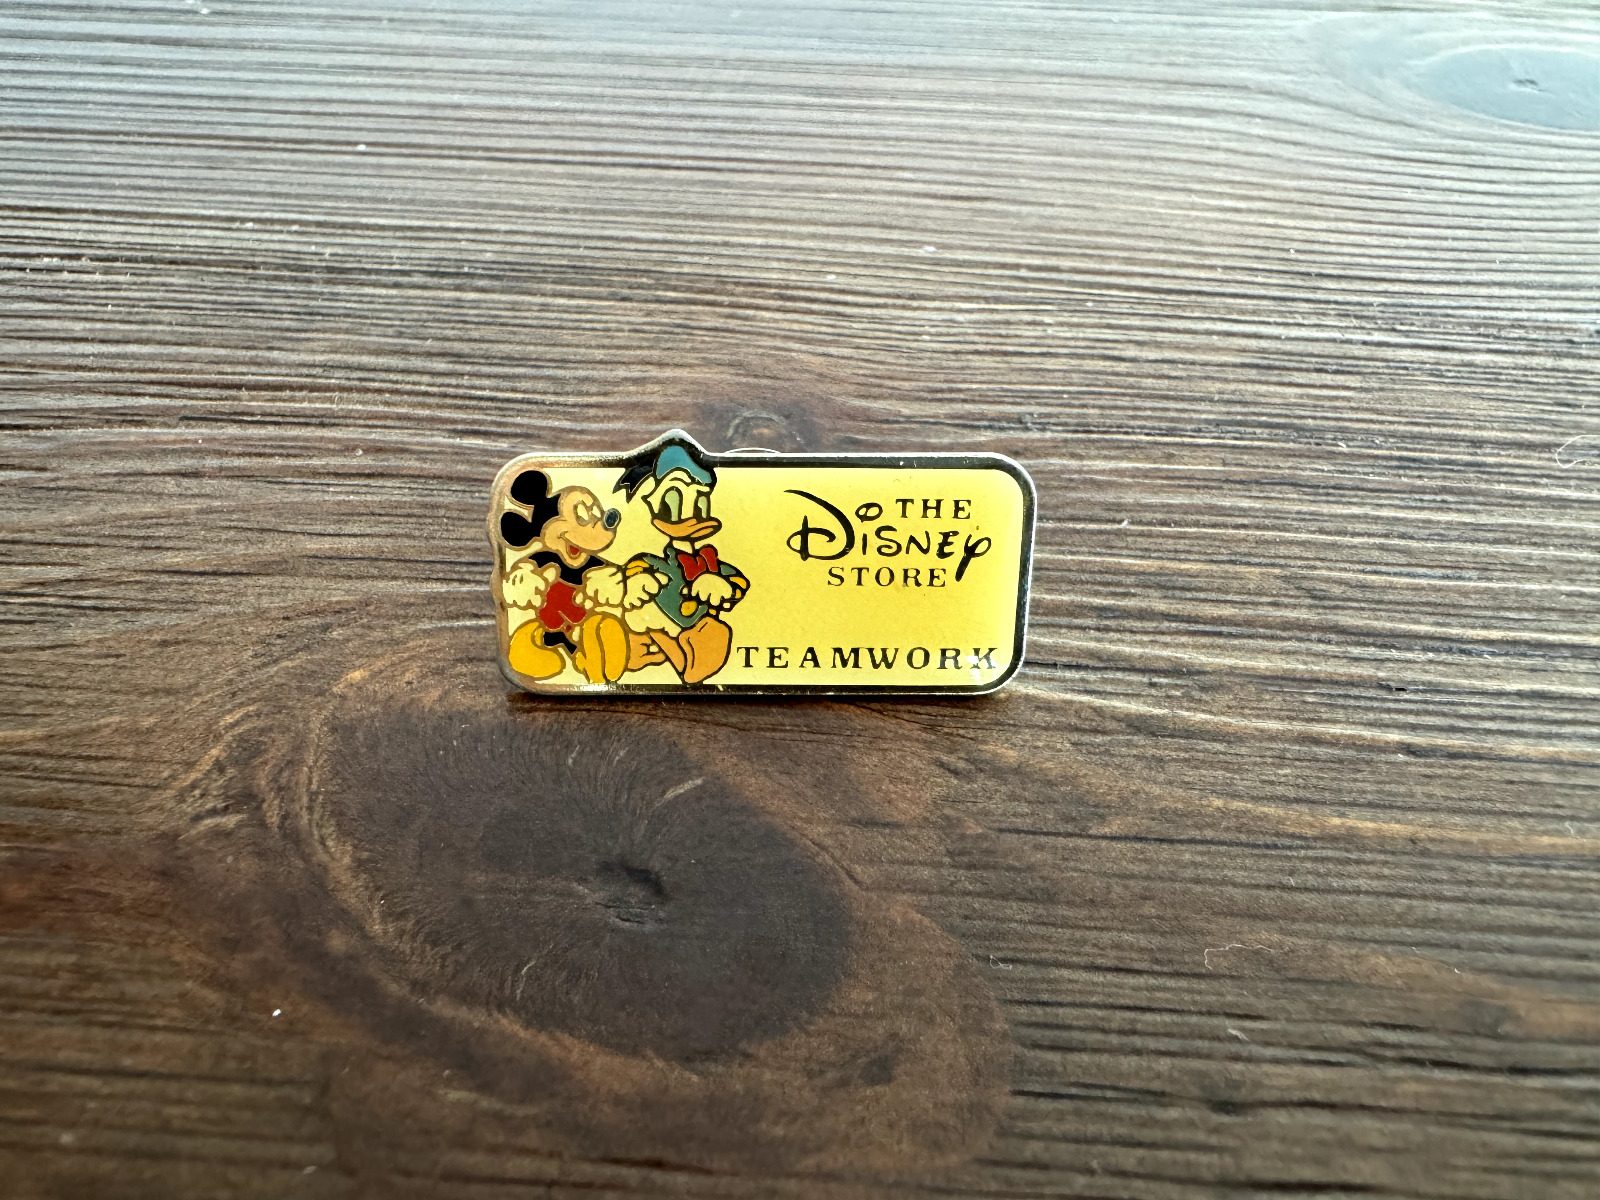 Teamwork Award Pin - The Disney Store - Mickey & Donald Cast Member Pin 1262